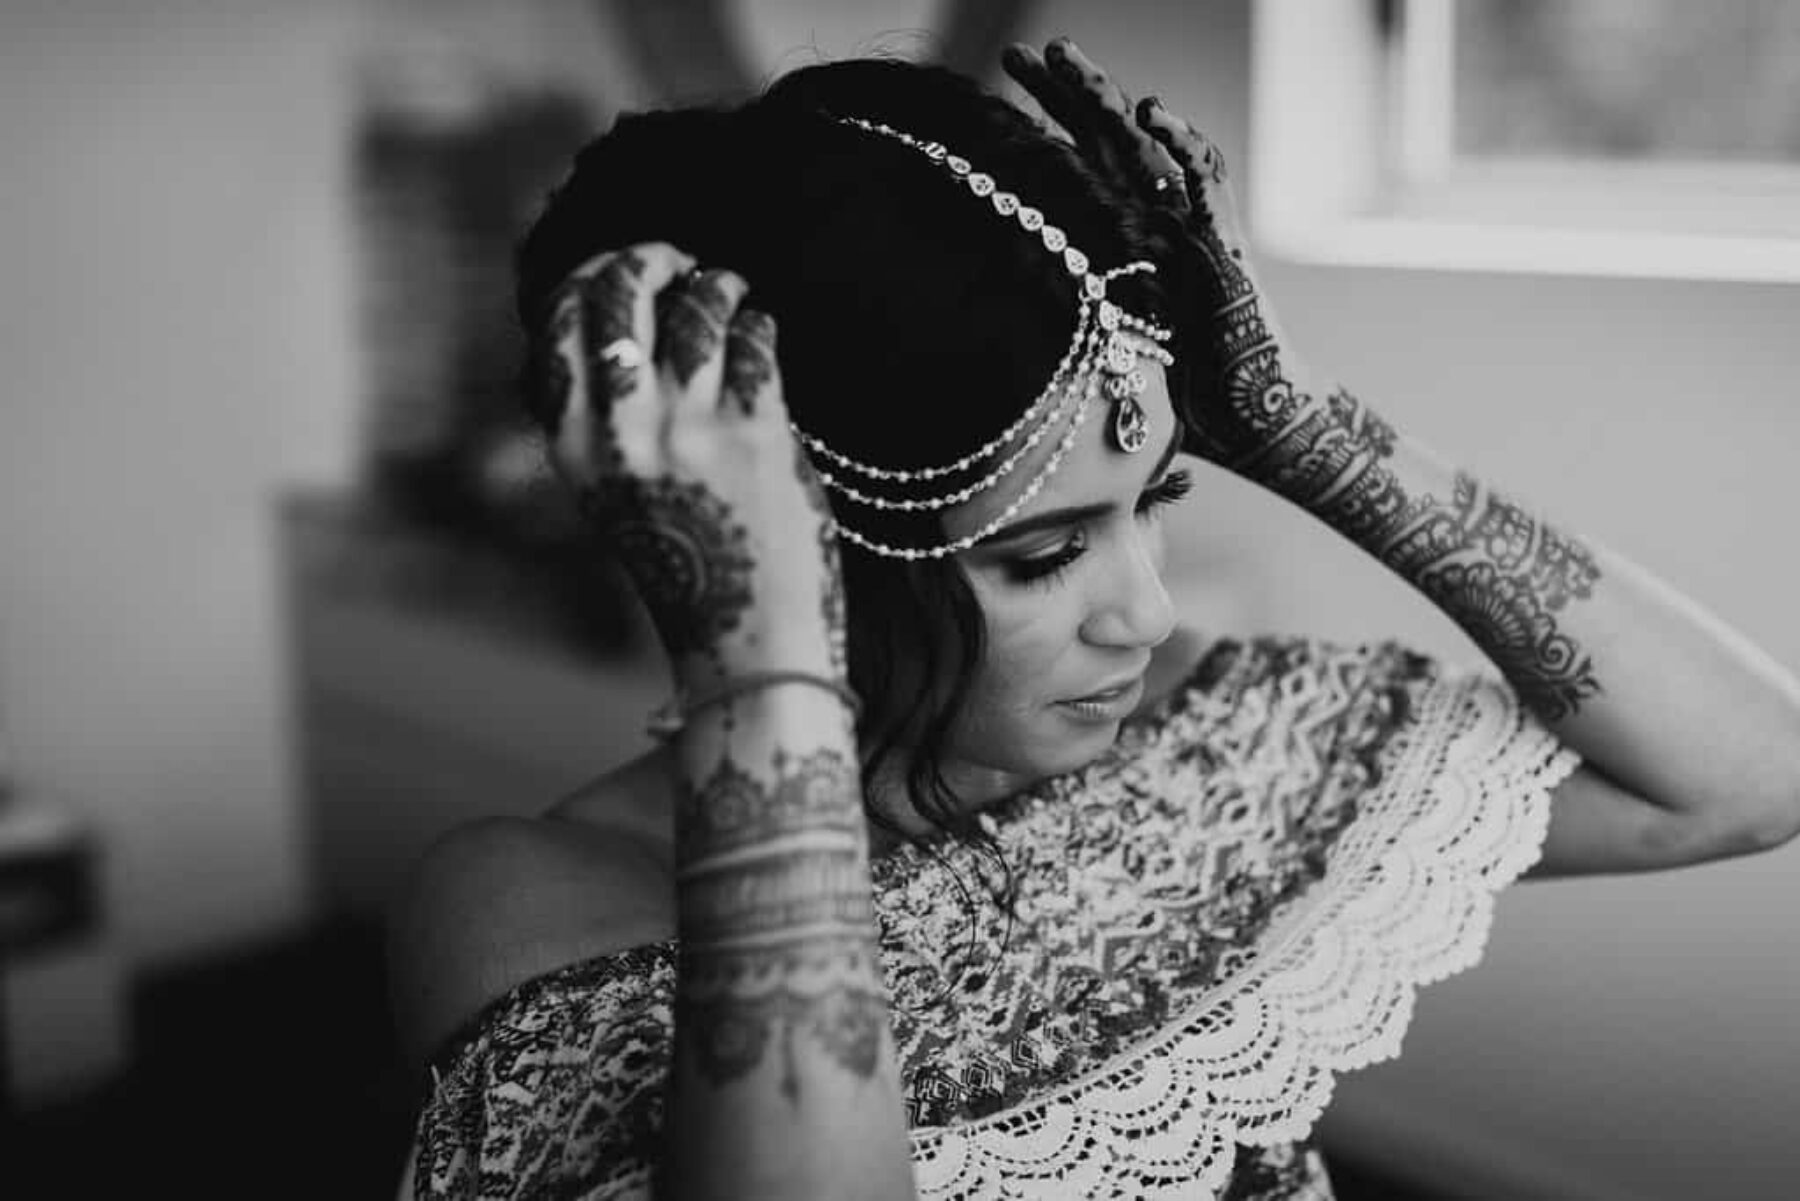 Stunning Hindu bride with headpiece